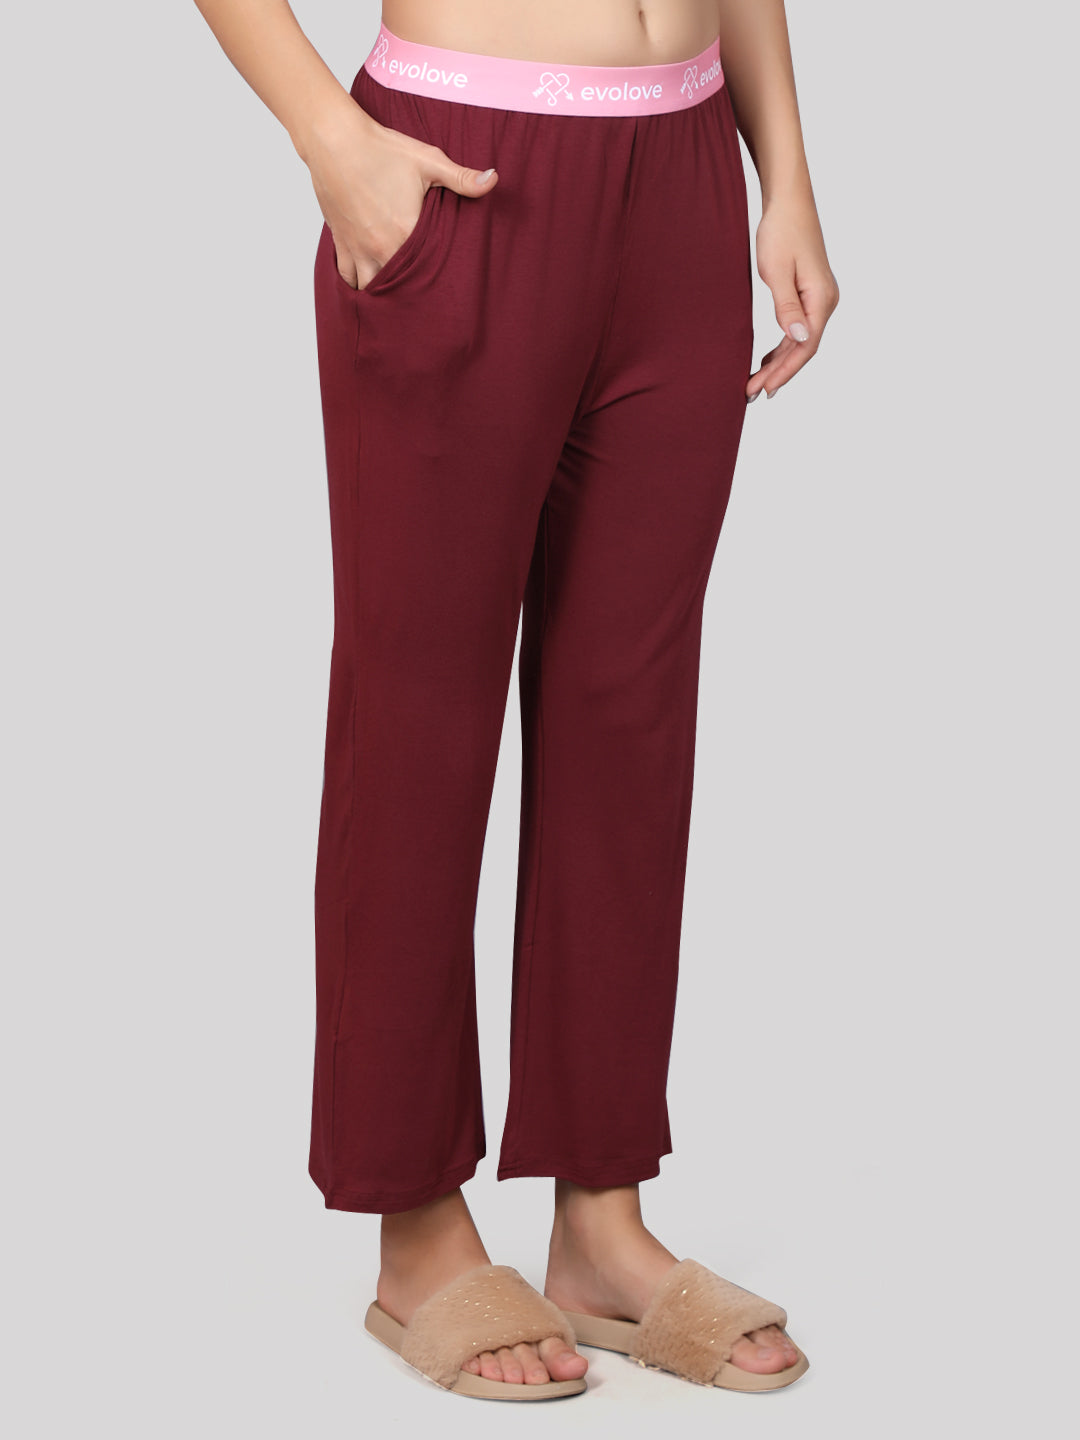 Evolove Maroon Super soft most comfortable Pajama set – Evolove India